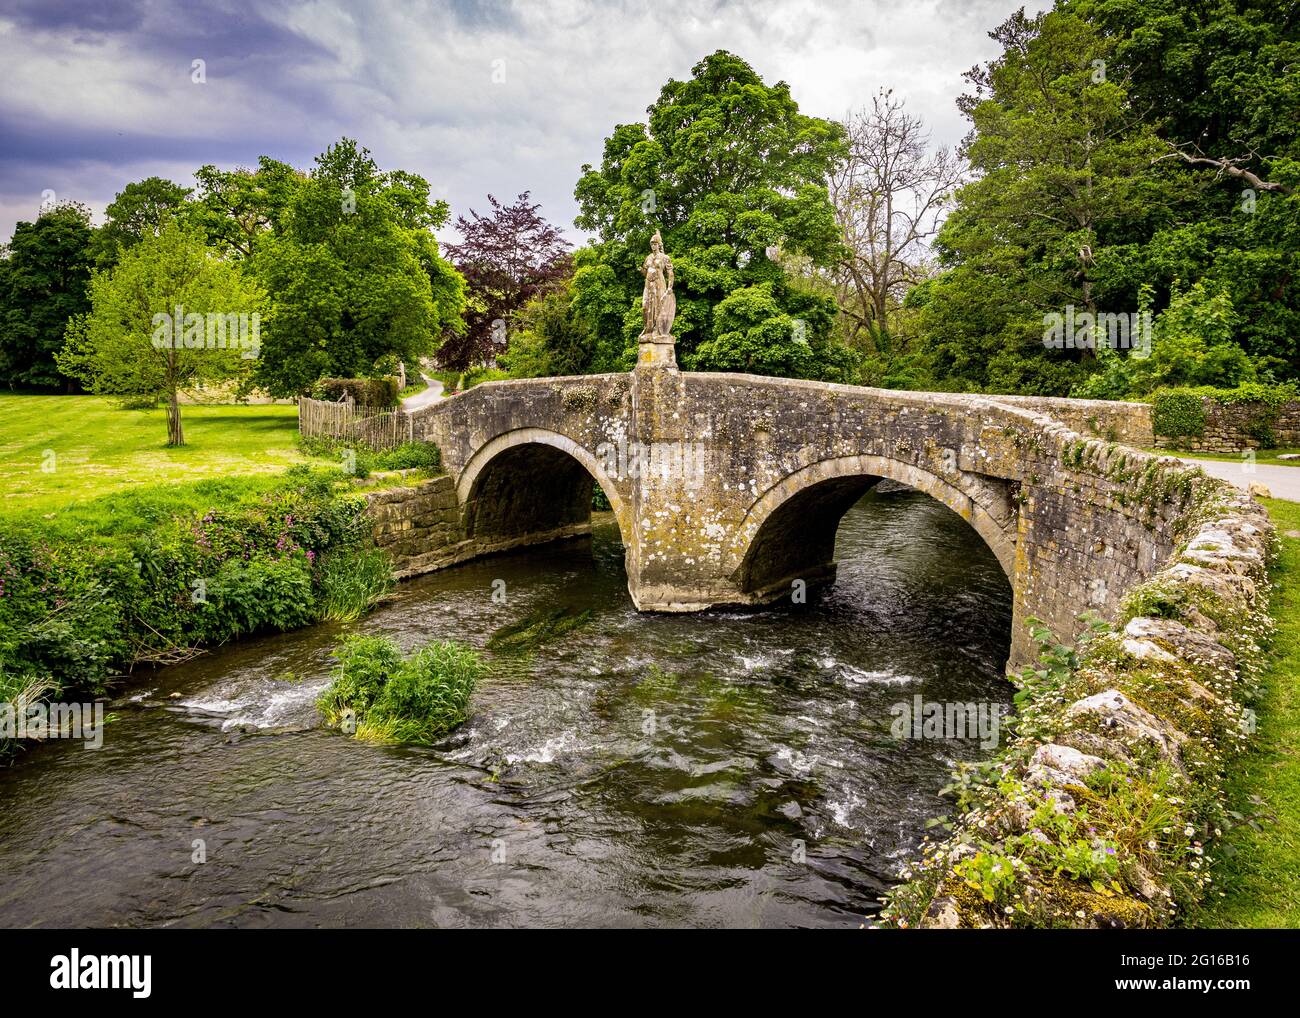 Iford Manor Bridge near Bath, UK. Stock Photo